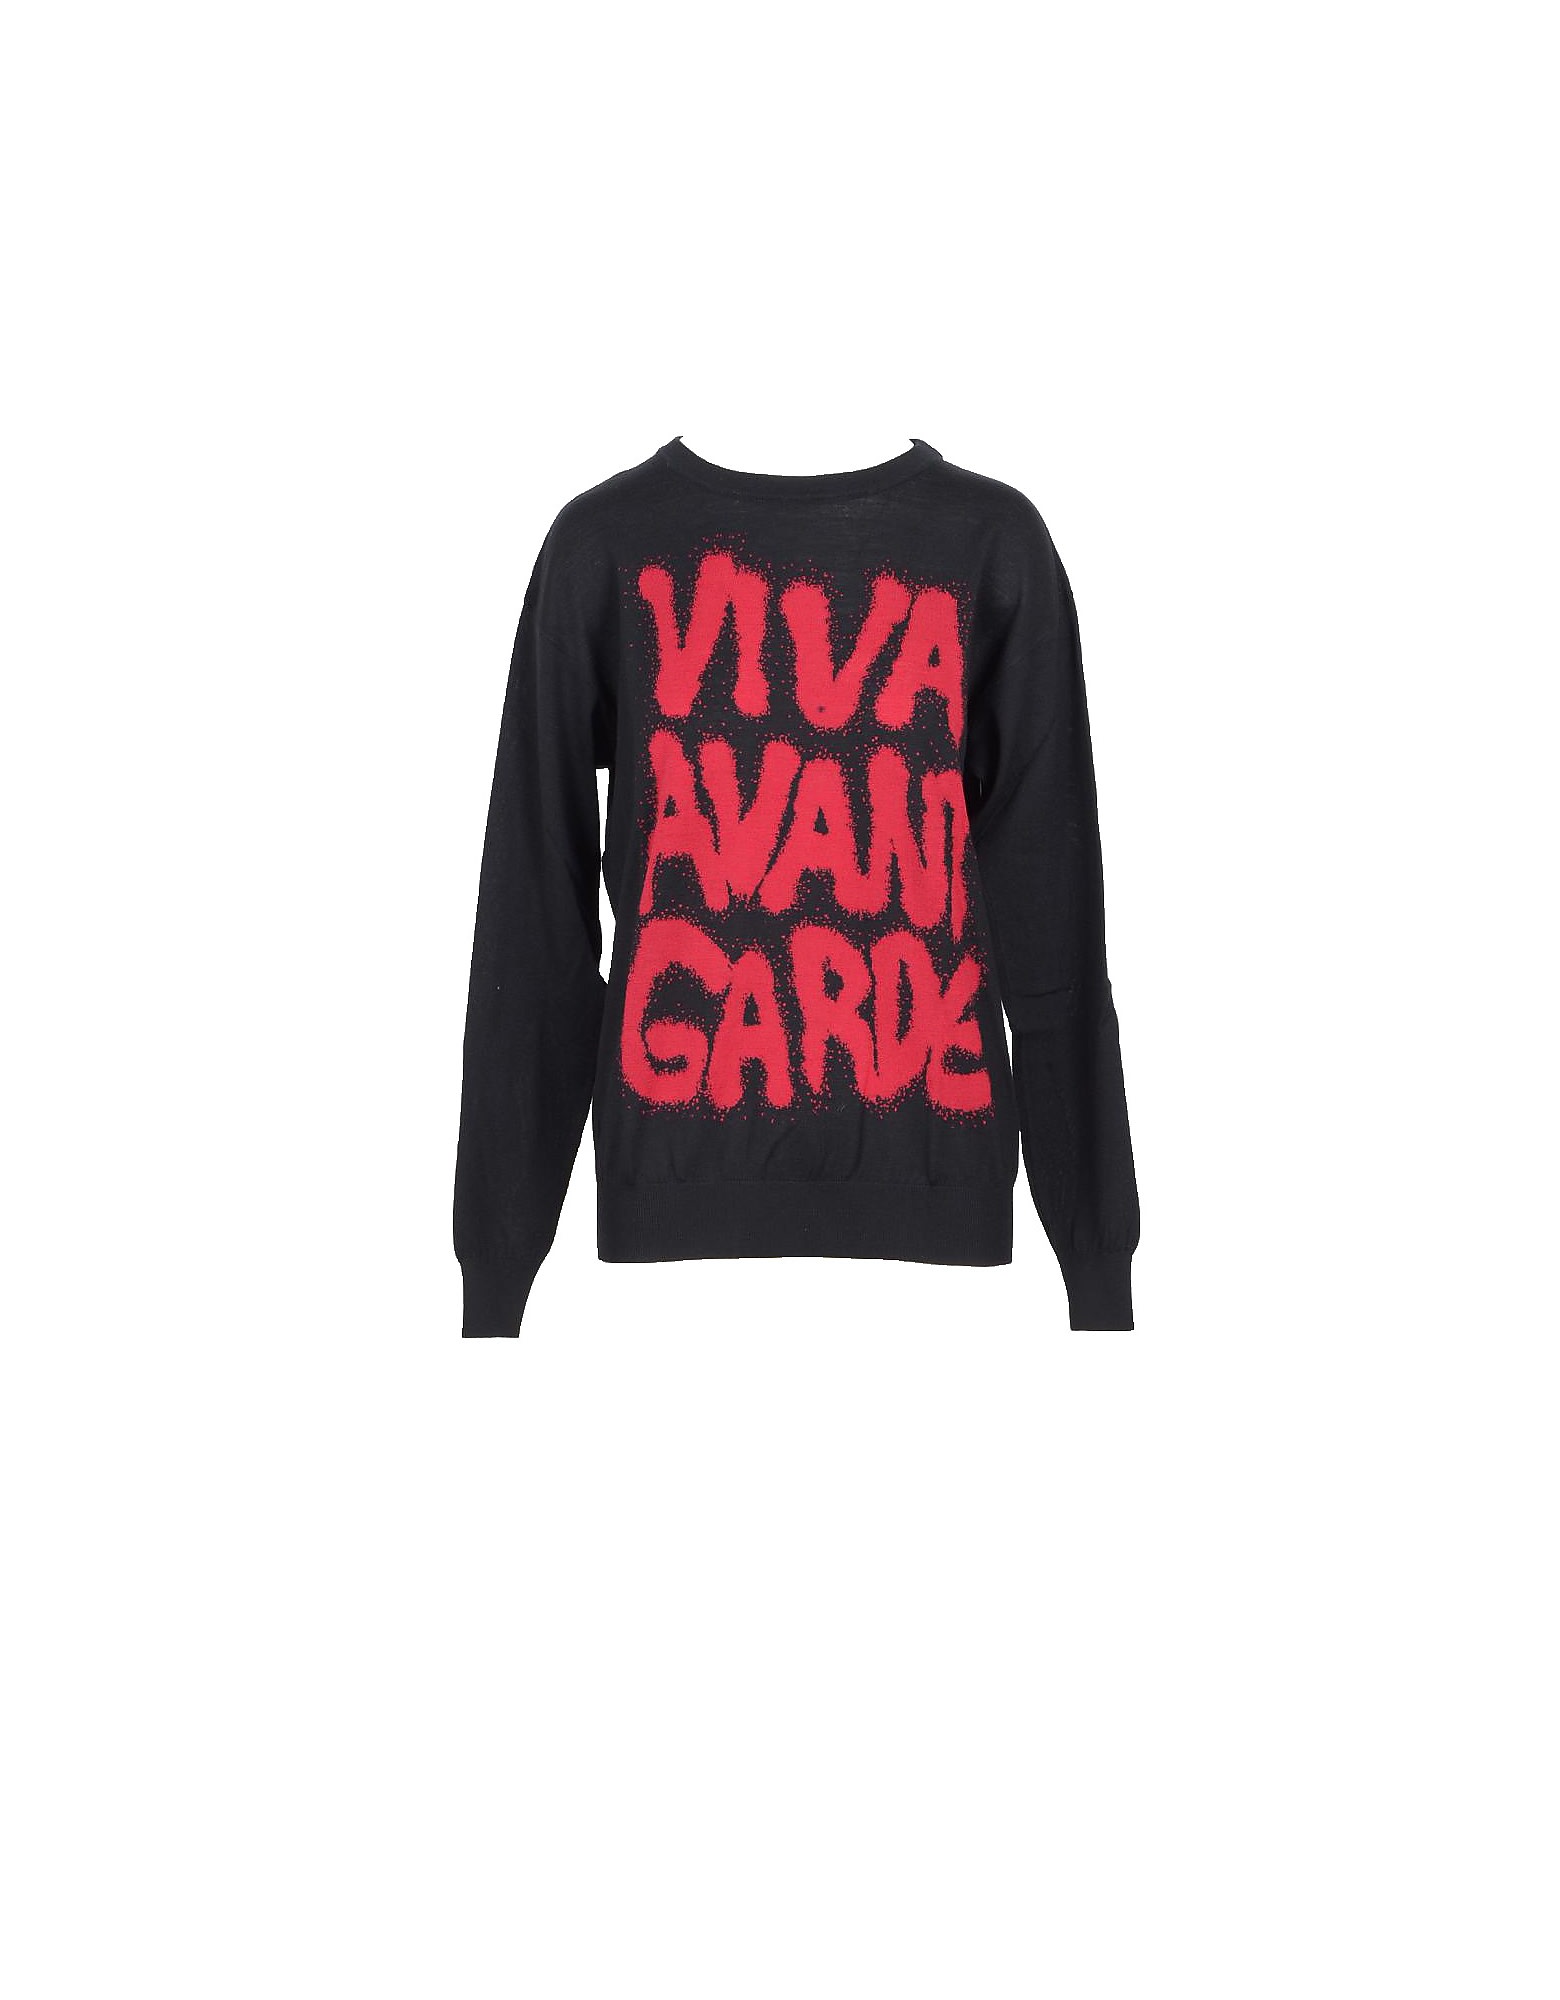 Jeremy Scott Viva Avant Garde Black Cotton Womens Sweater